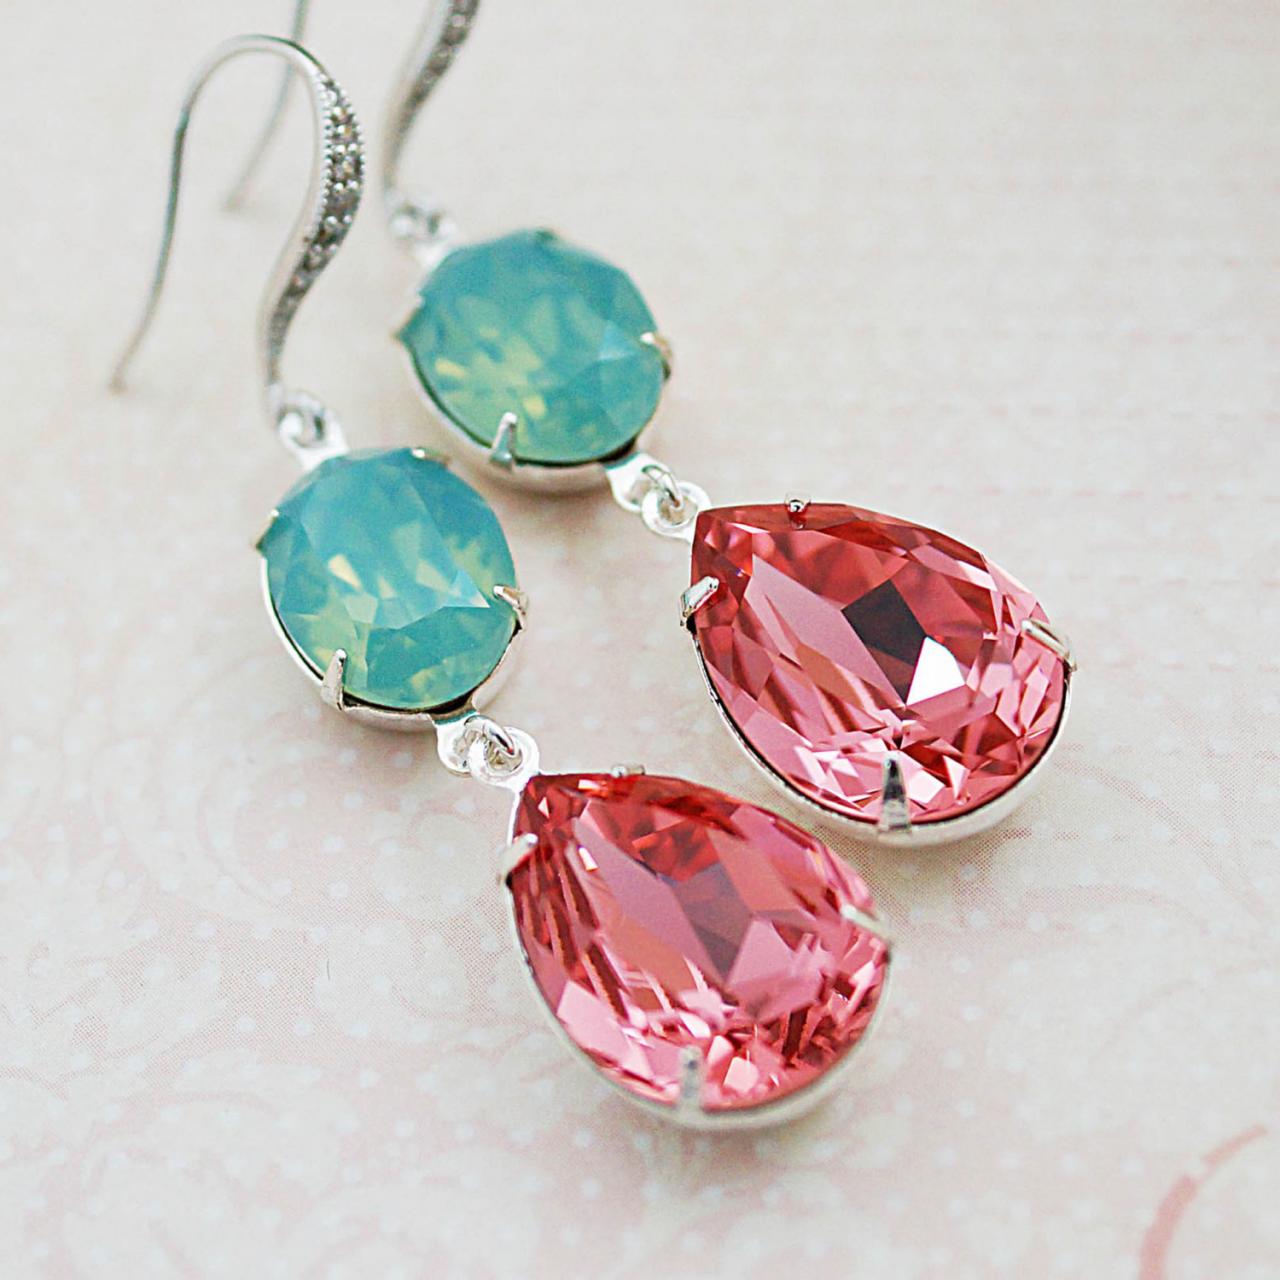 Wedding Jewelry Bridesmaid Earrings Dangle Earrings Estate Style Earrings Rose Peach With Mint Opal Swarovski Crystal Dangle Earrings Gift